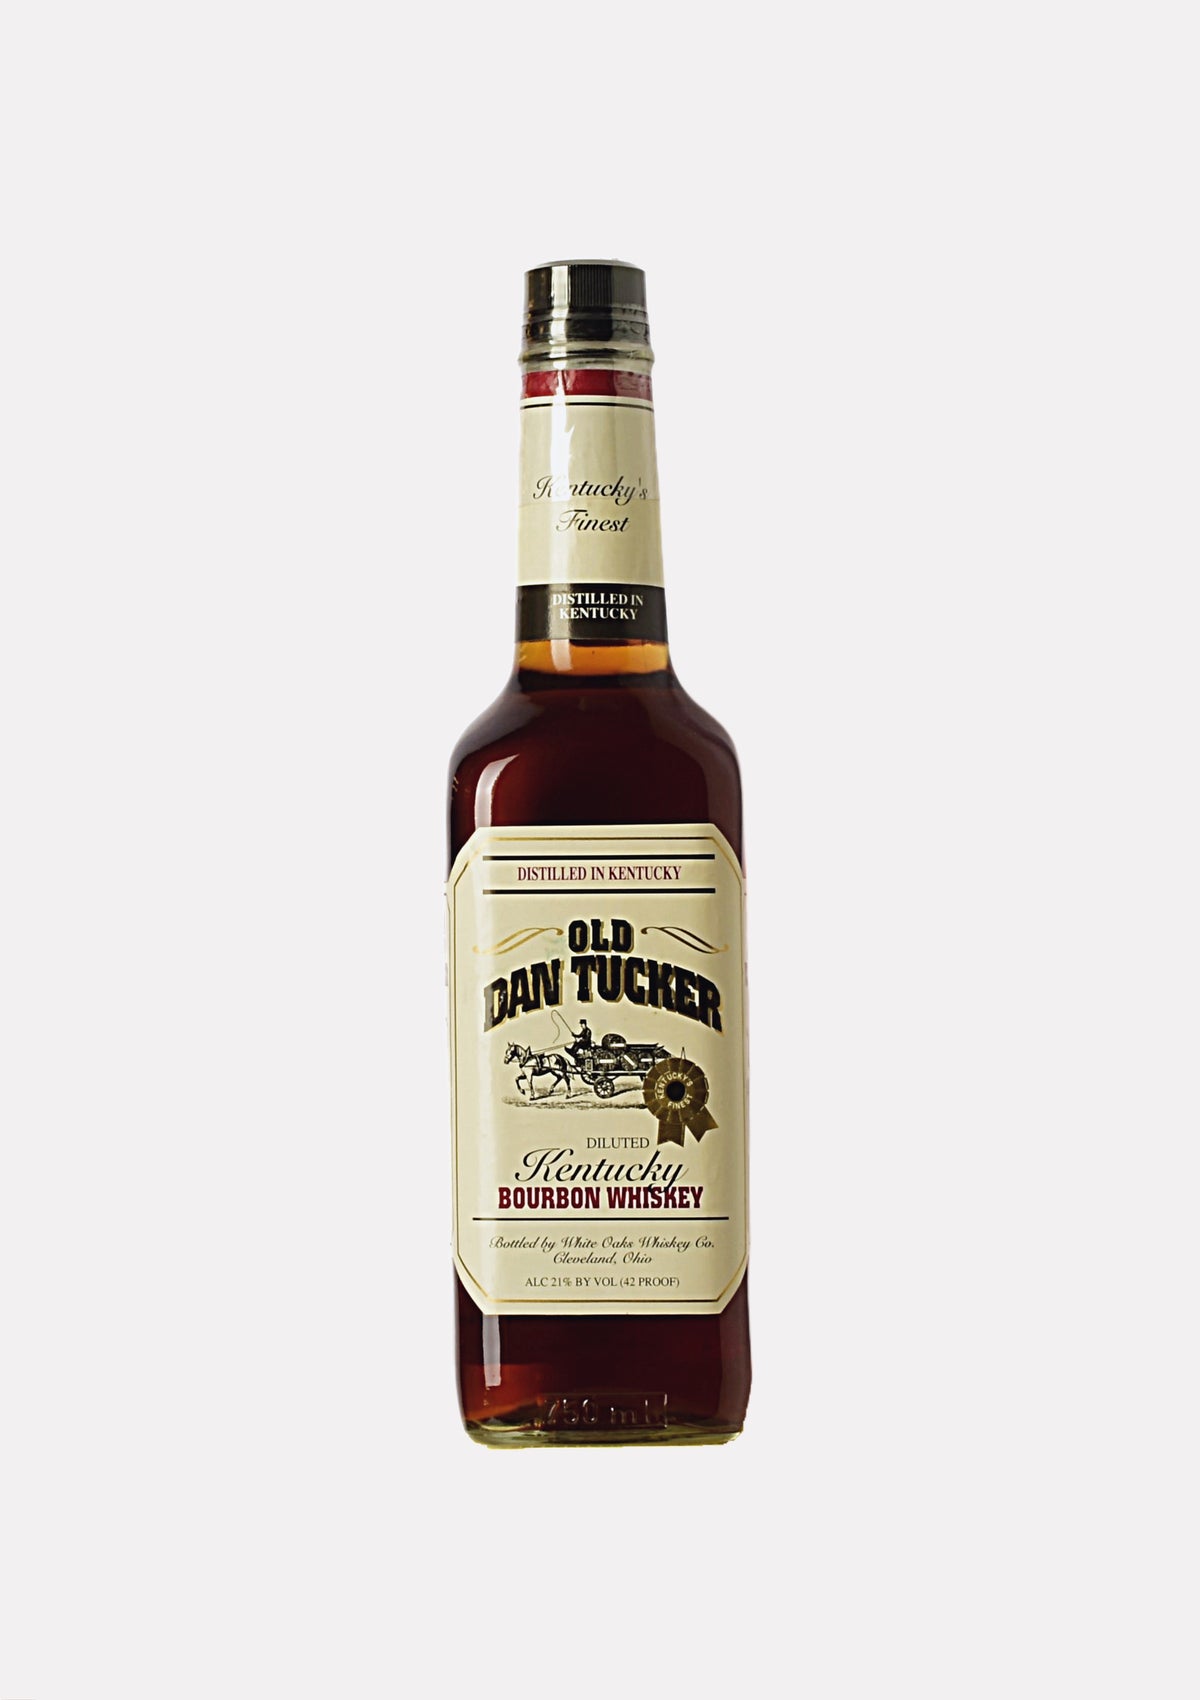 Old Dan Tucker Kentucky Bourbon Whiskey